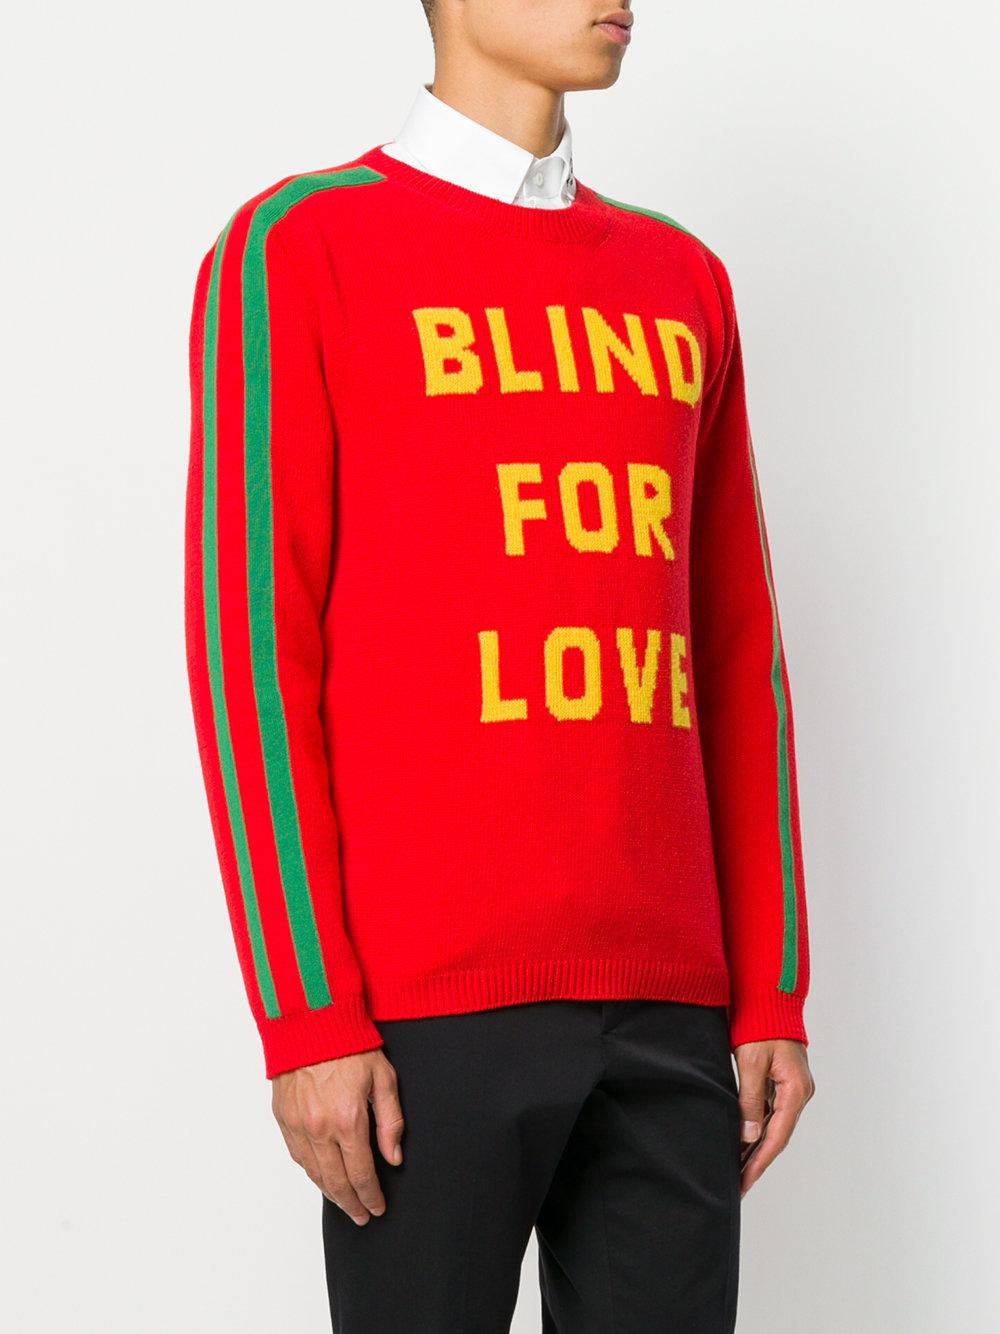 blind for love gucci jumper